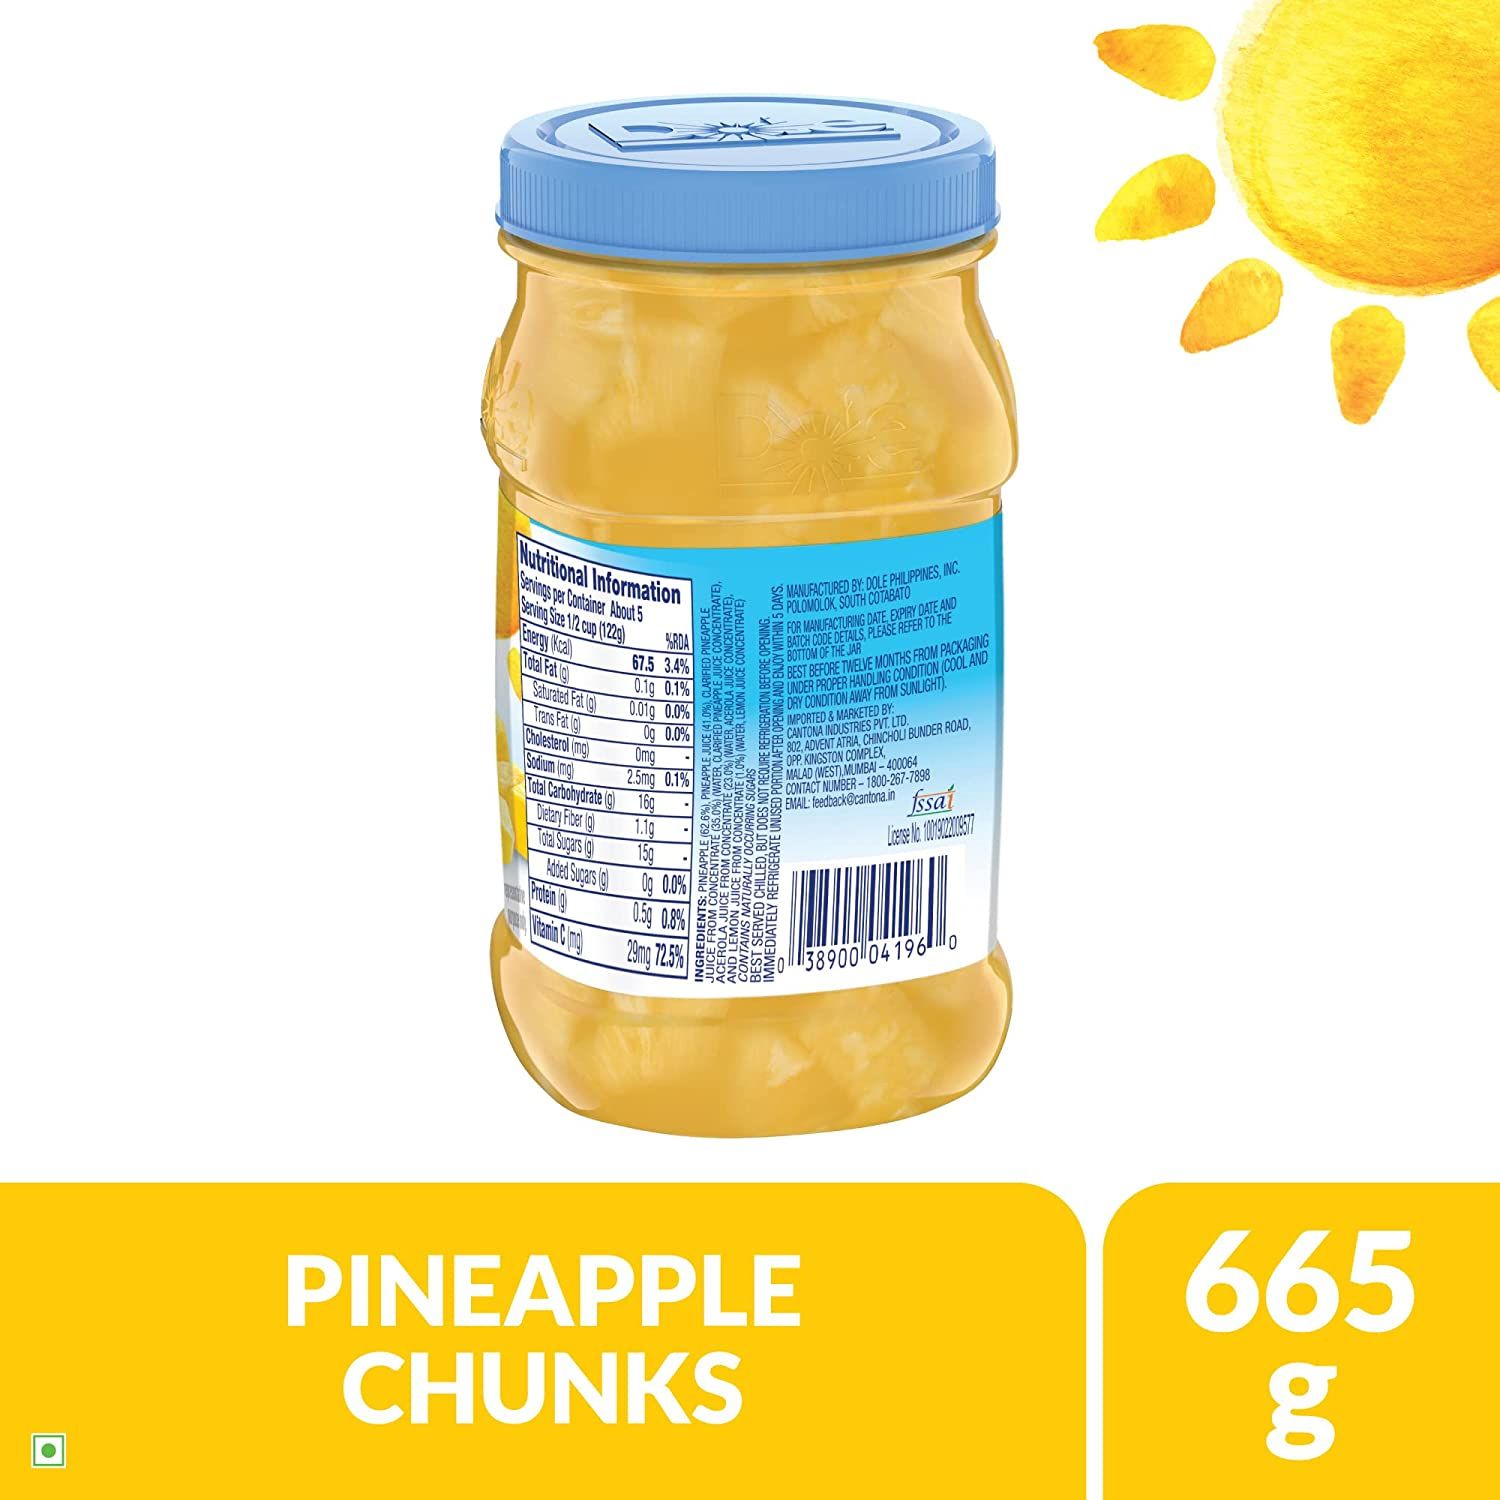 Dole Pineapple Chunks Image